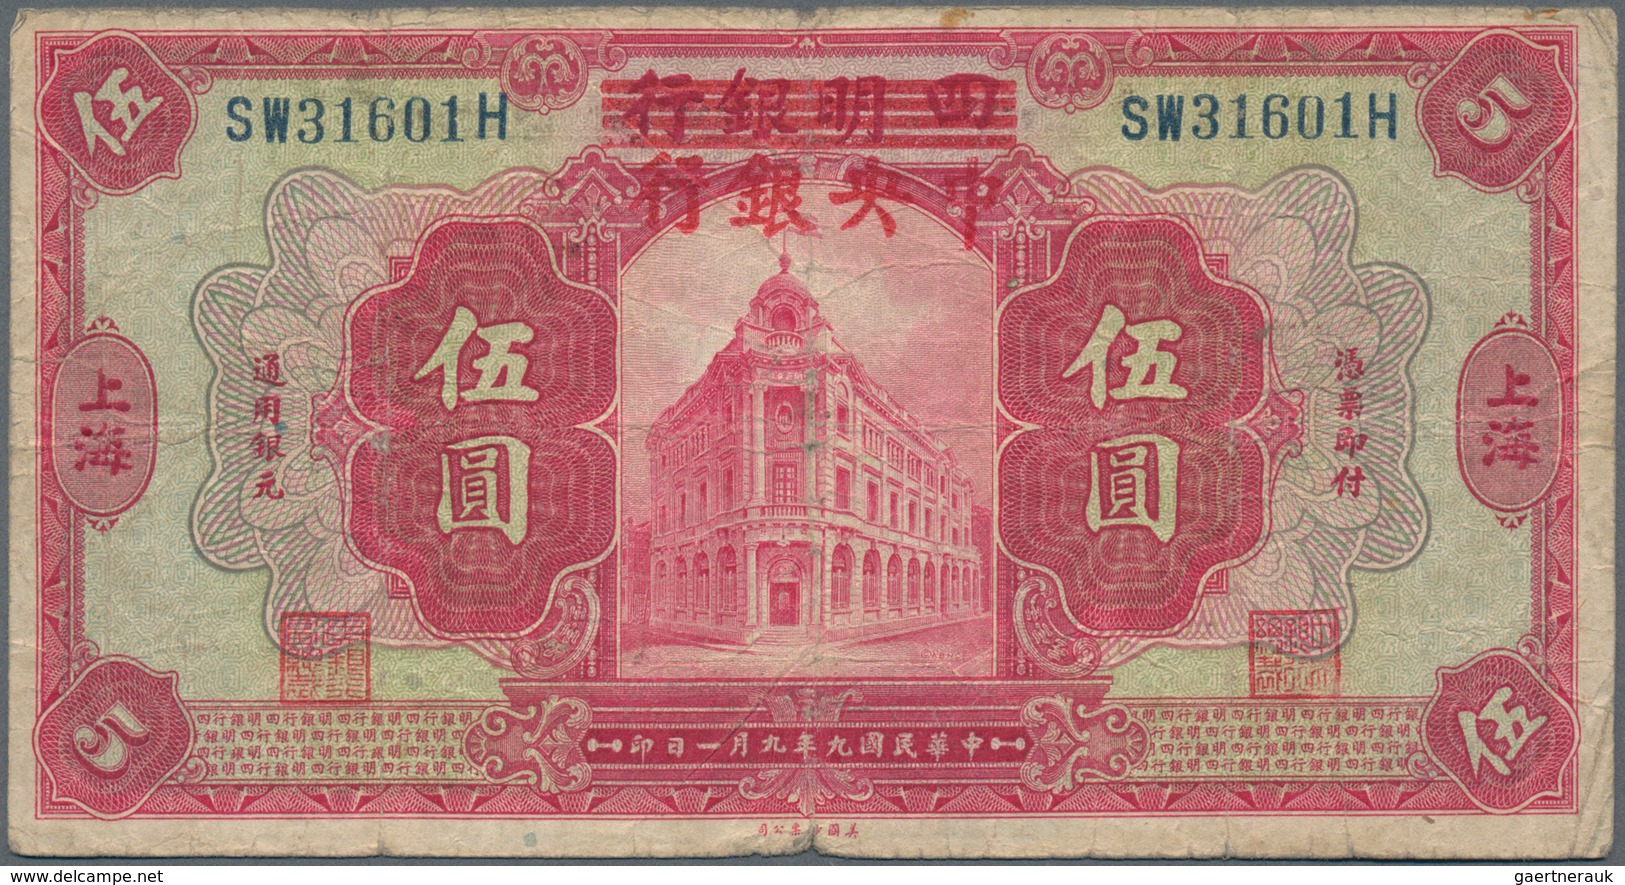 China: Central Bank Of China 5 Dollars 1920 (1928) With Overprint "The Central Bank Of China" On A N - China